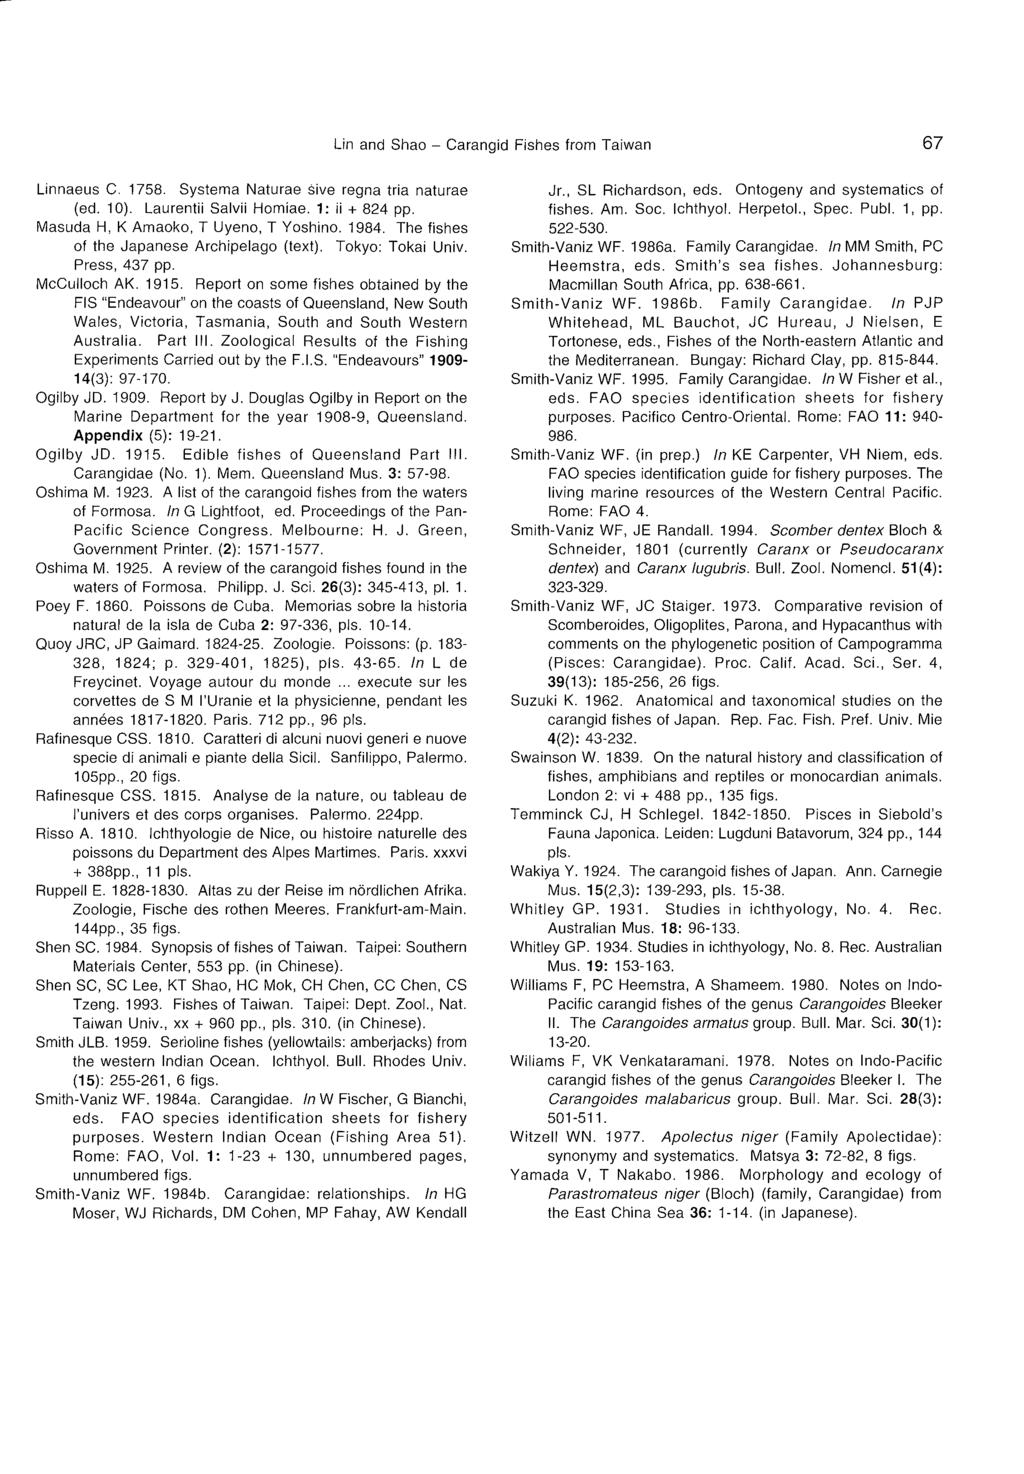 Lin and Shao - Carangid Fishes from Taiwan 67 Linnaeus C. 1758. Systema Naturae siva regna tria naturae (ed. 10). Laurentii Salvii Homiae. 1: ii + 824 pp. Masuda H, K Amaoko, T Uyeno, T Yoshino. 1984.